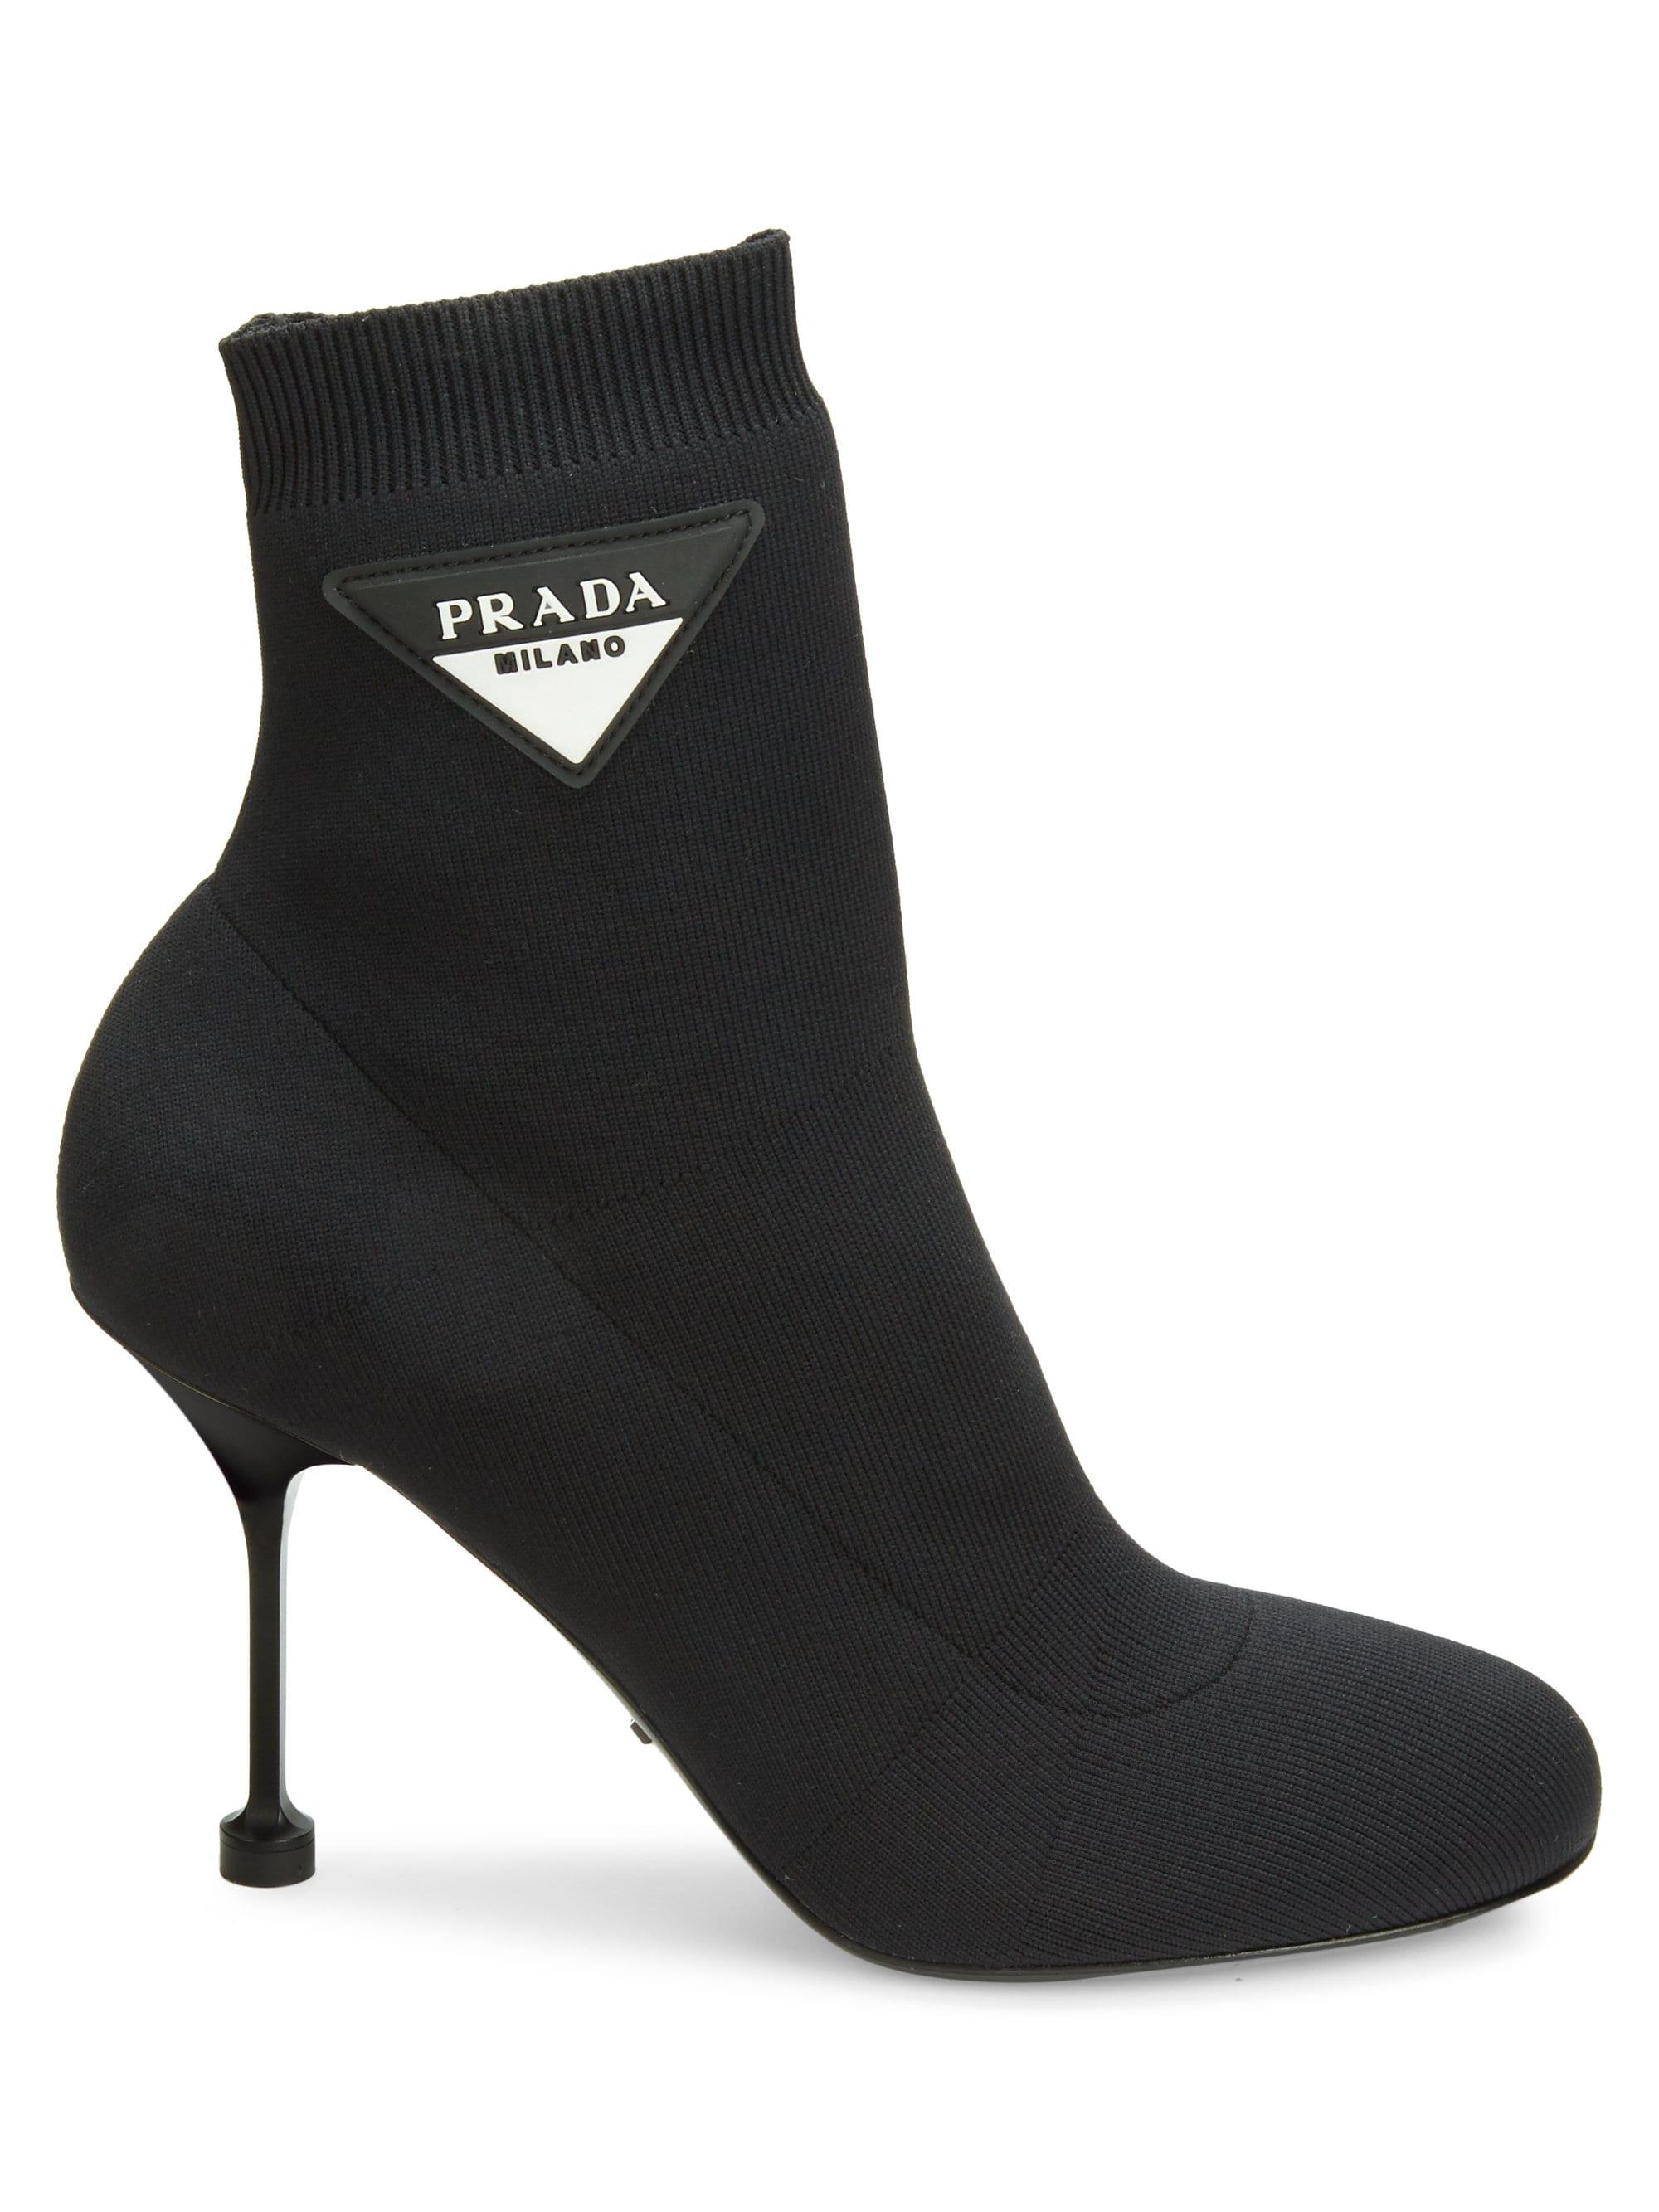 Prada Logo 90 Sock Black Booties | Lyst